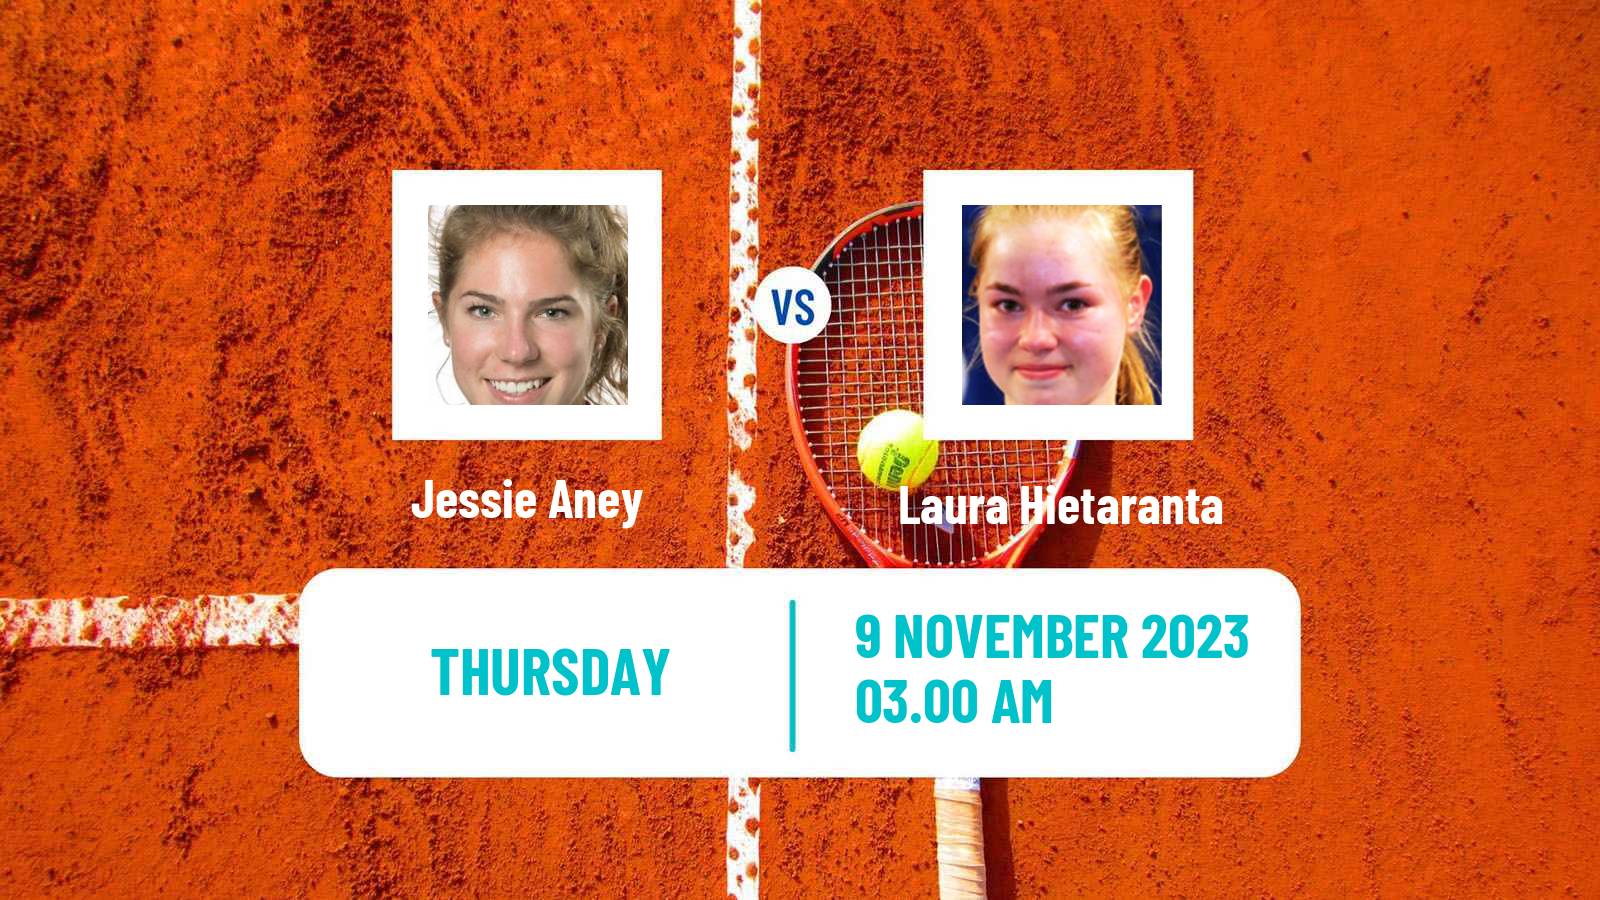 Tennis ITF W25 Solarino 2 Women Jessie Aney - Laura Hietaranta